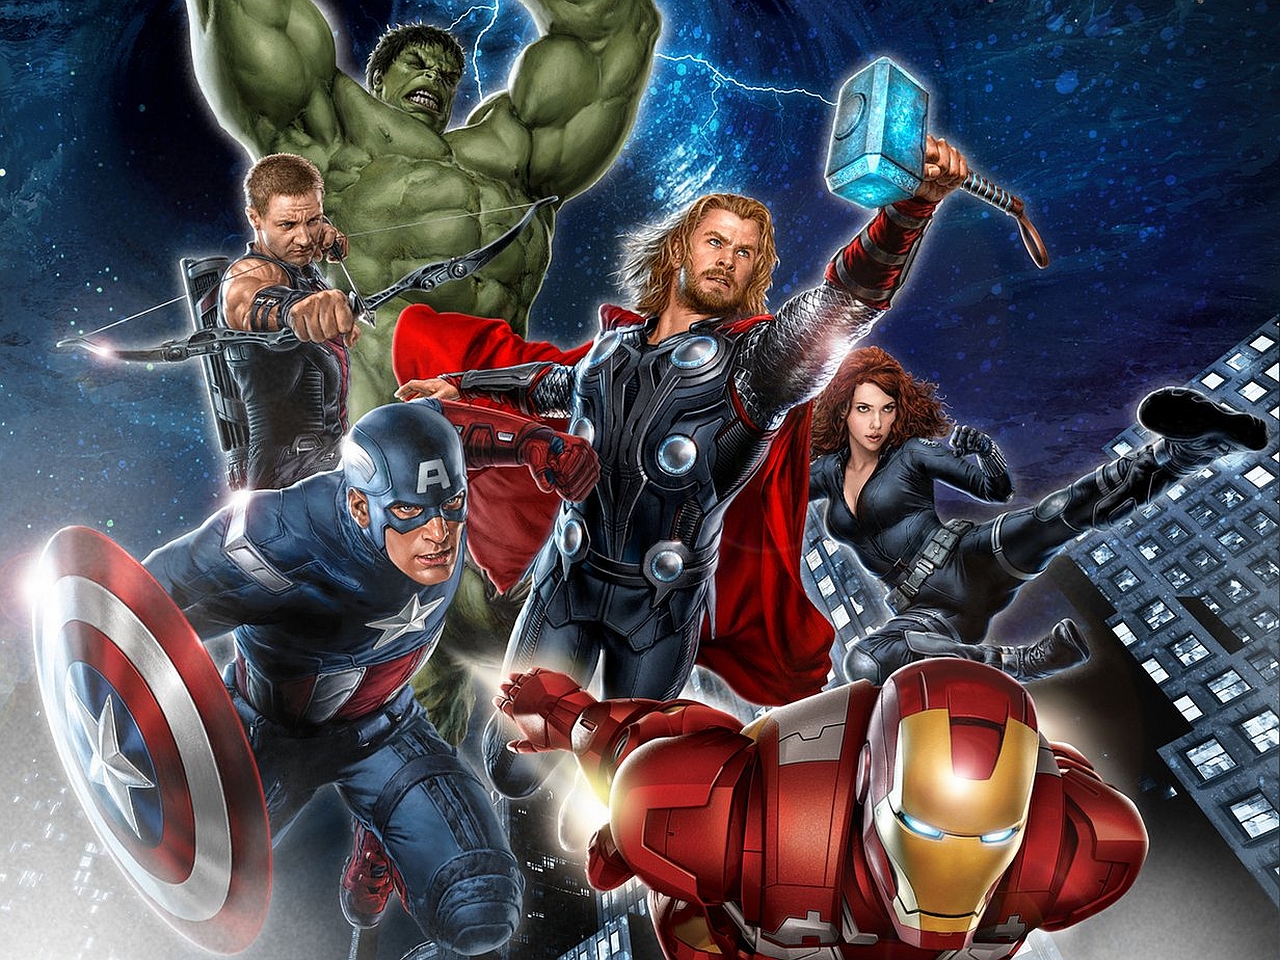 Avengers Action Shot Wallpaper Background